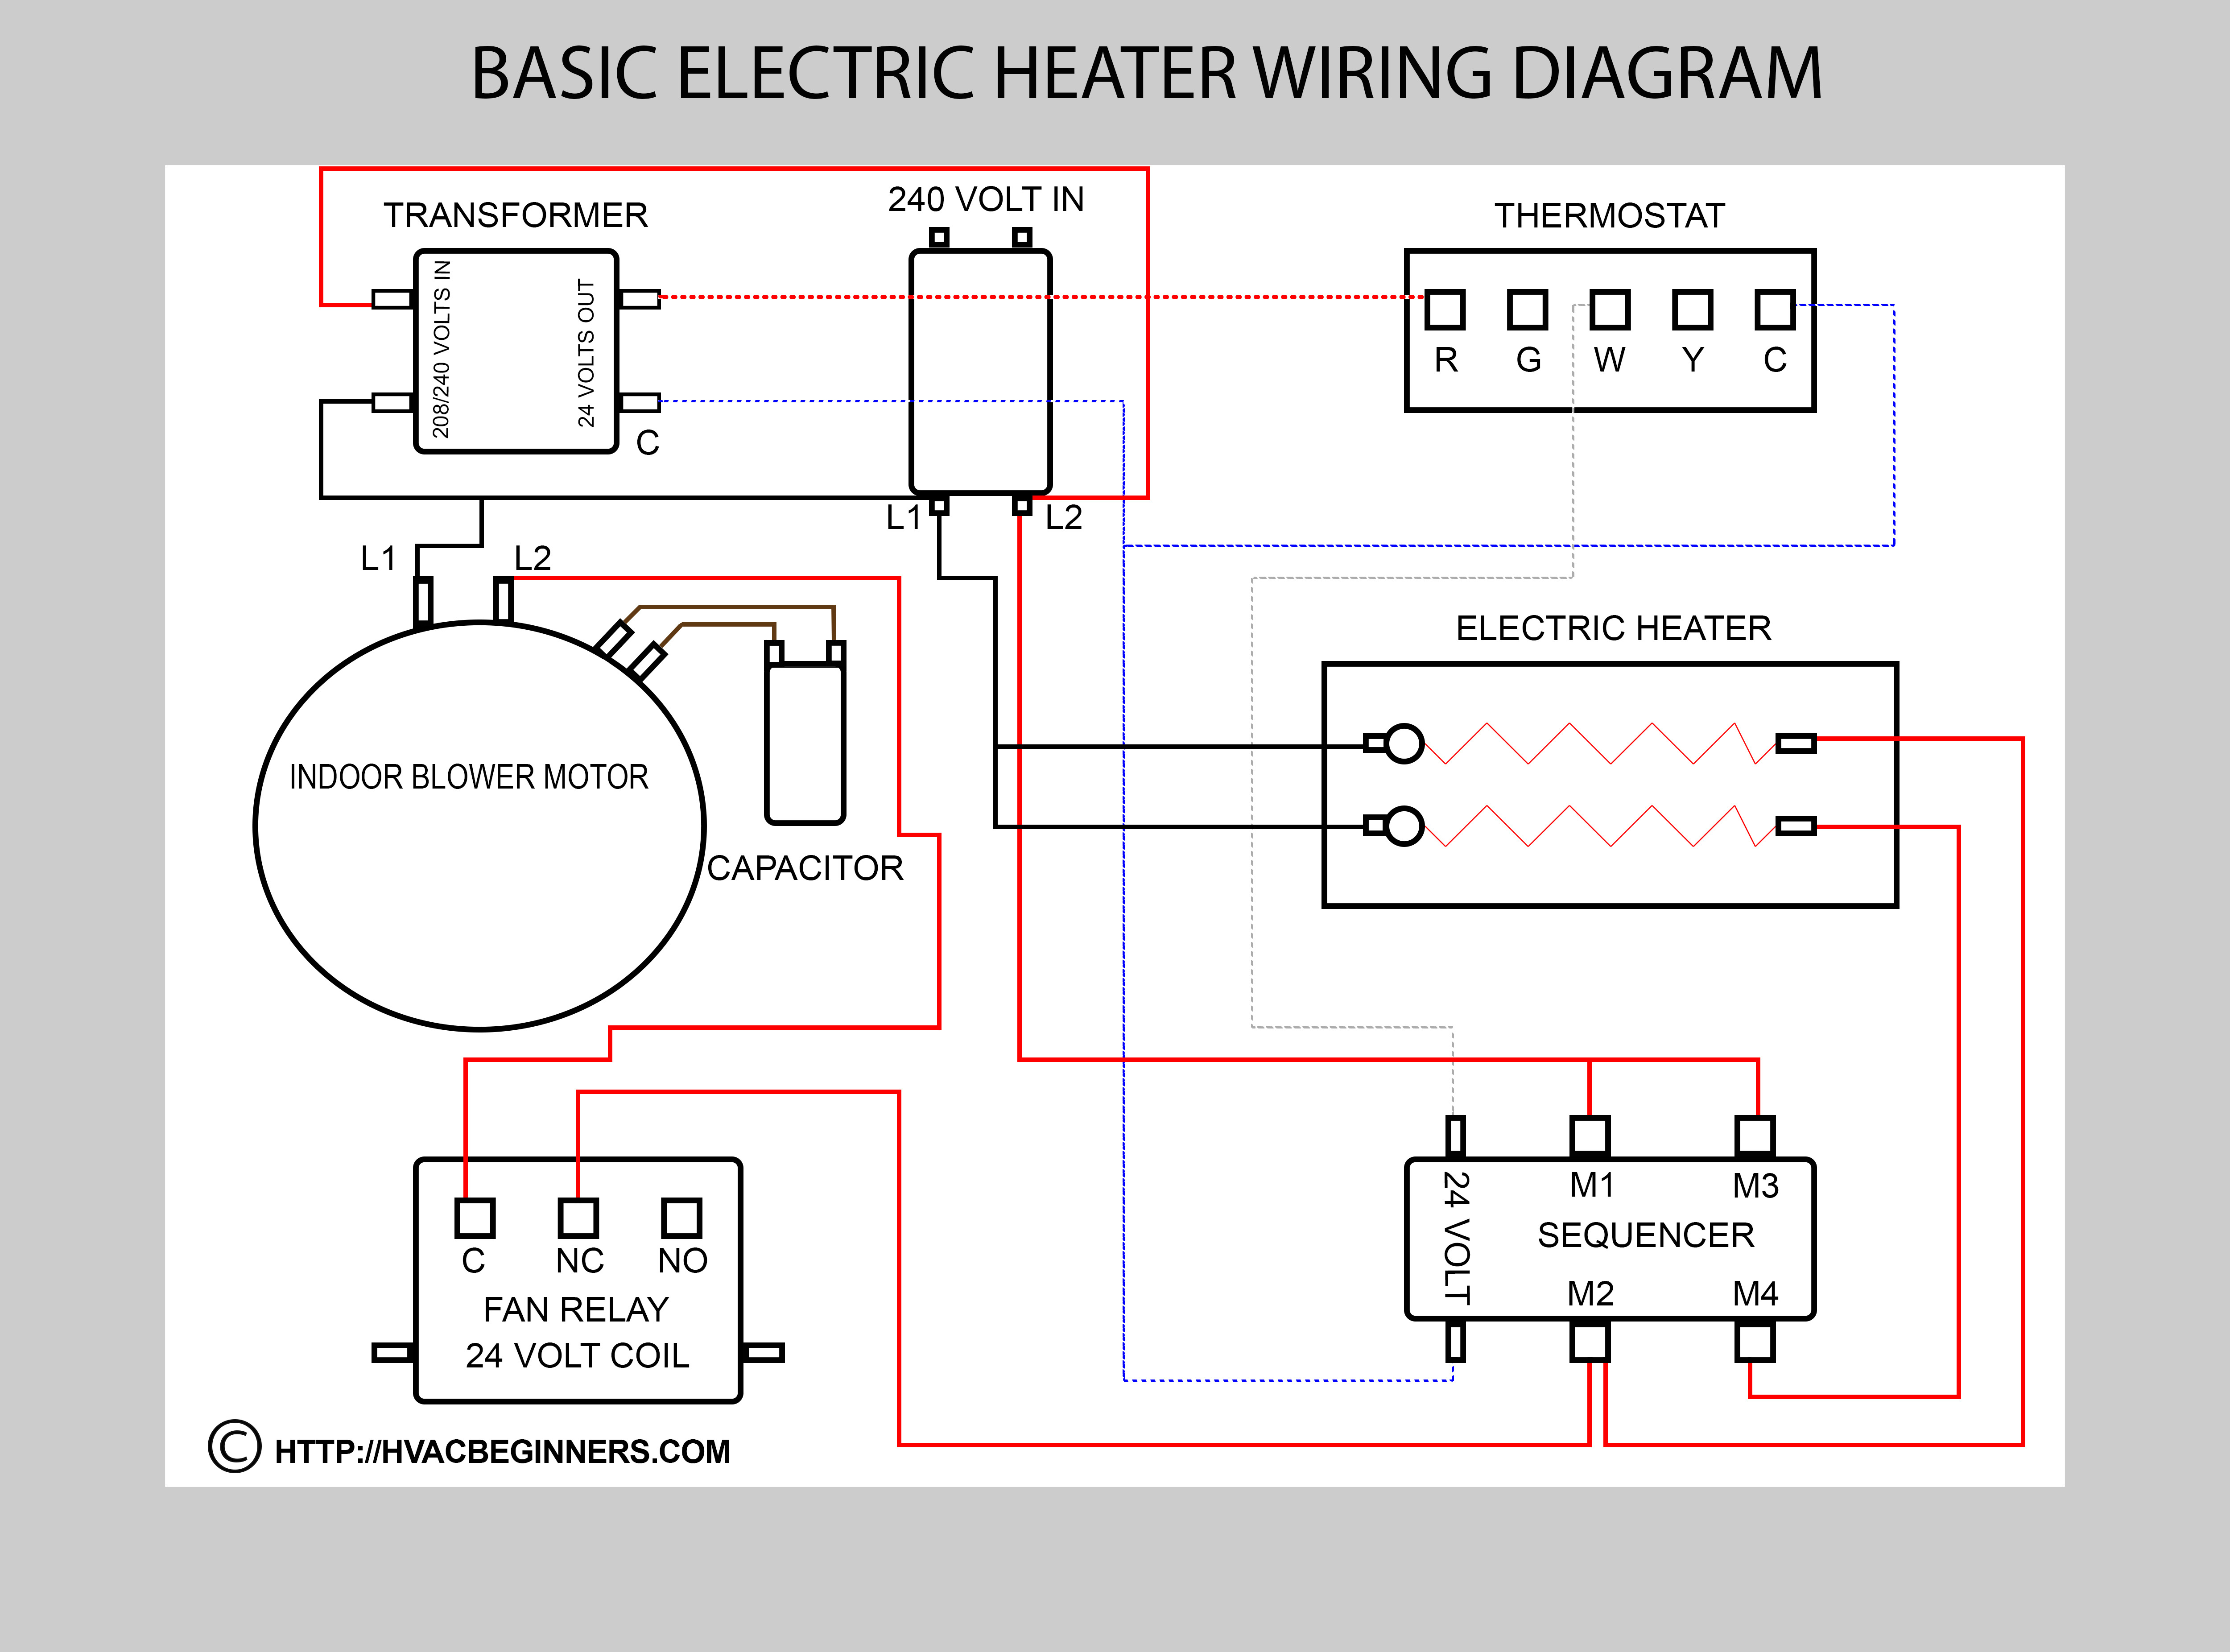 Electric Heater Wiring Diagram | Schematic Diagram - Electric Heater Wiring Diagram